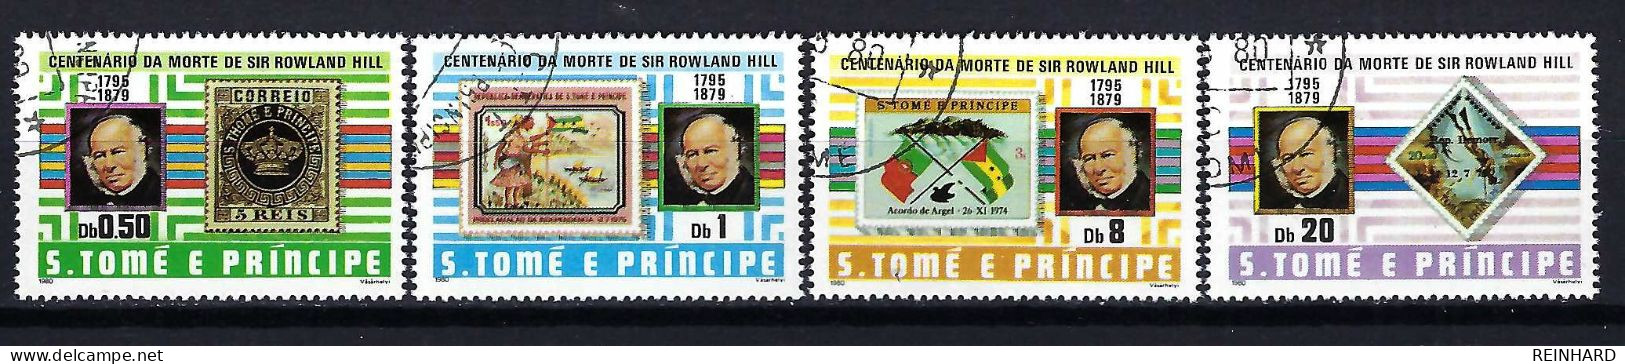 S. TOME E PRINCIPE Komplettsatz Mi-Nr. 641 - 644 Sir Rowland Hill Gestempelt - Siehe Bild - Sao Tome And Principe